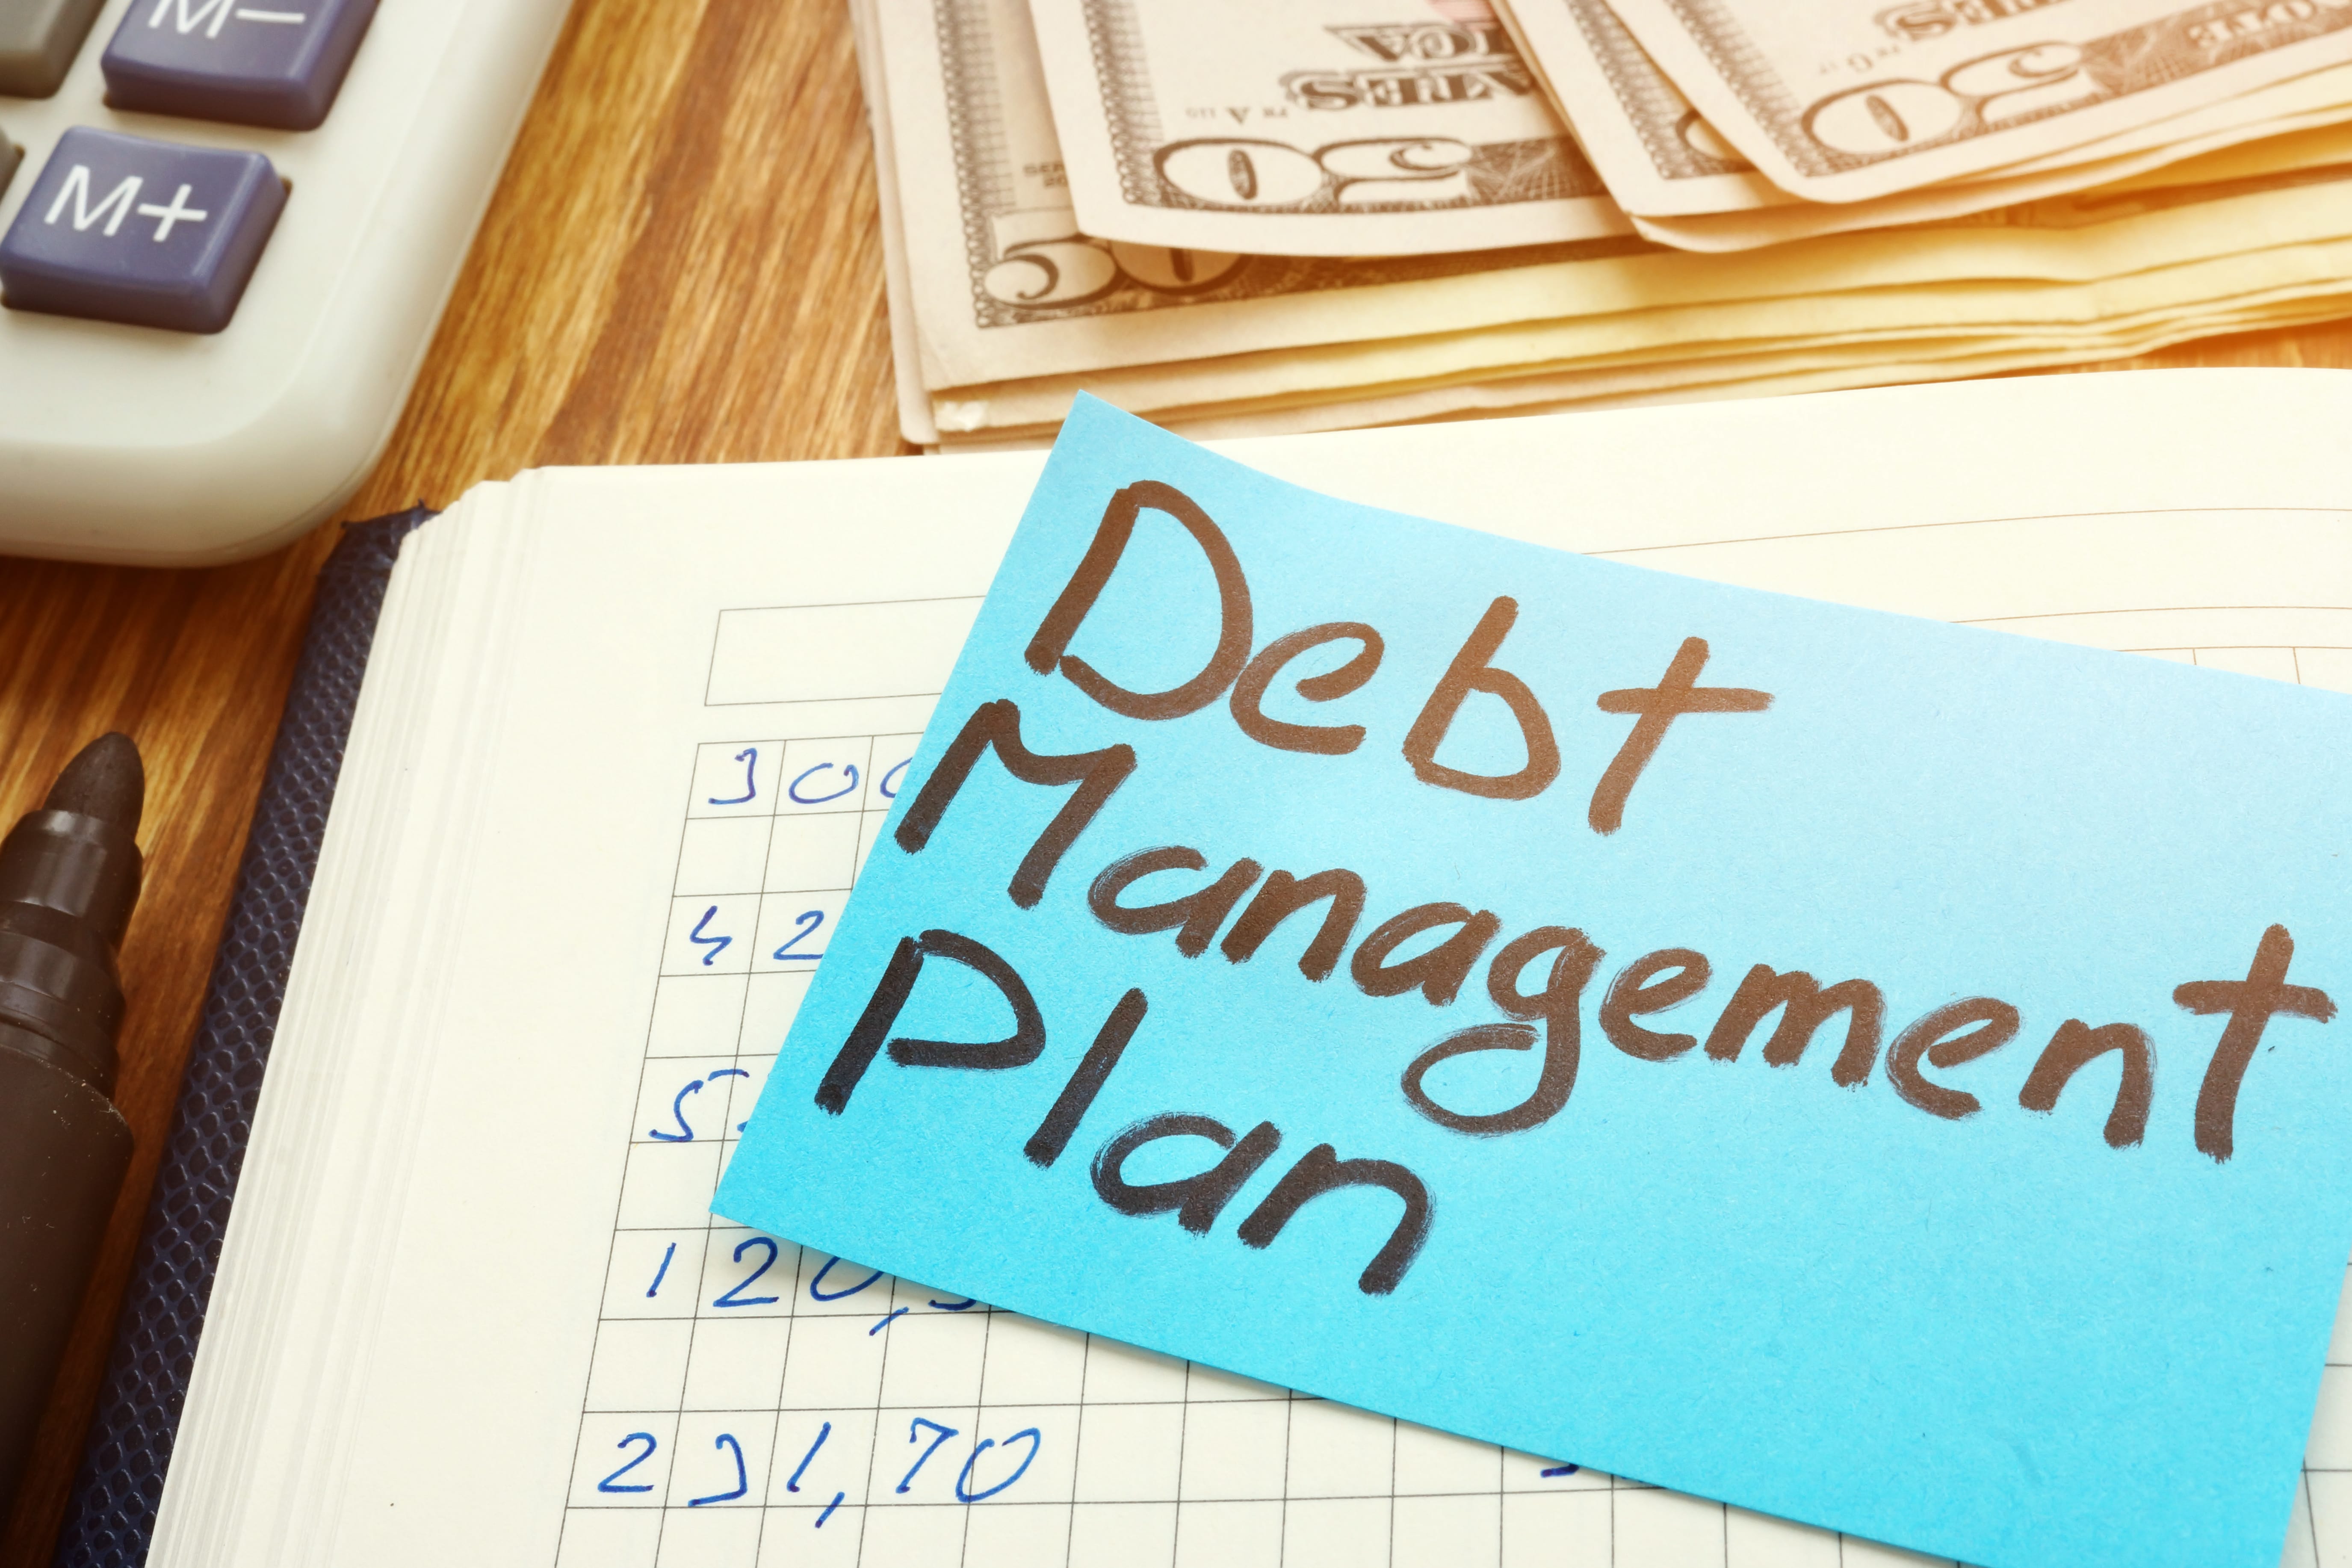 debt management plan for businesses